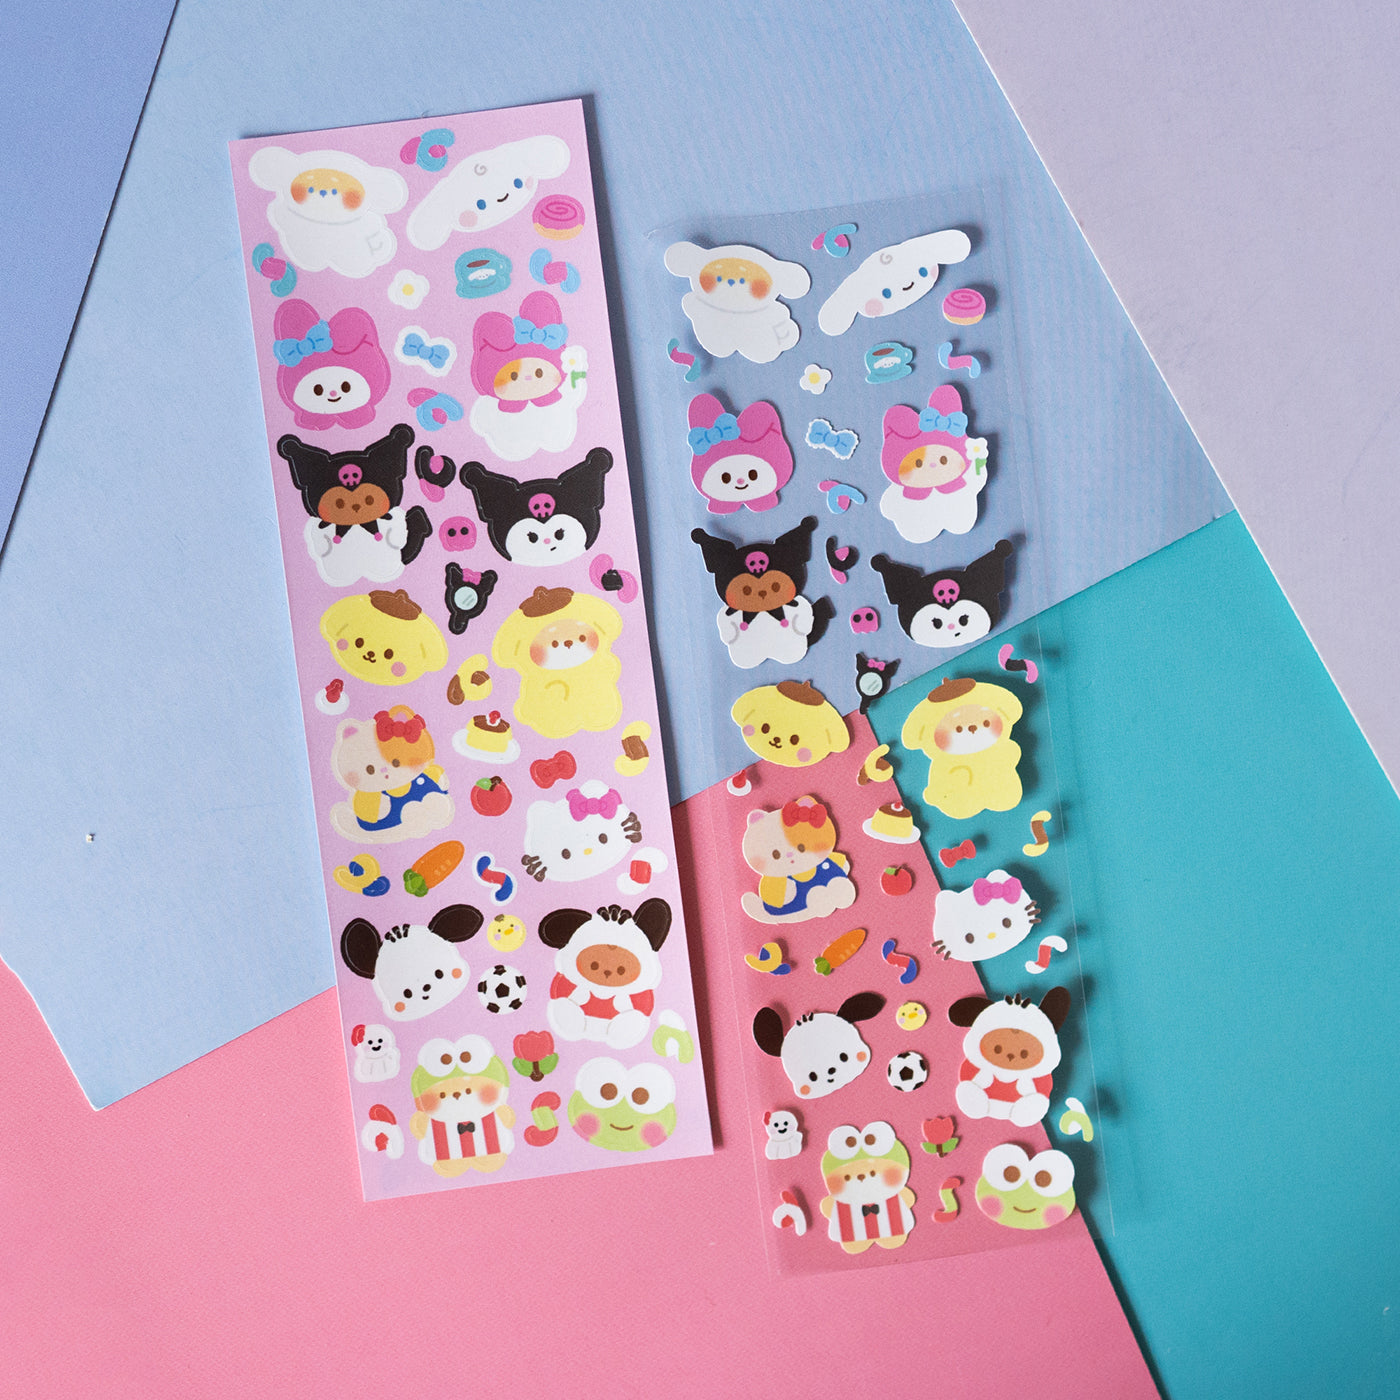 *new* Sanrio Characters and Minty Friends Fan Art Journal Sticker Sheet